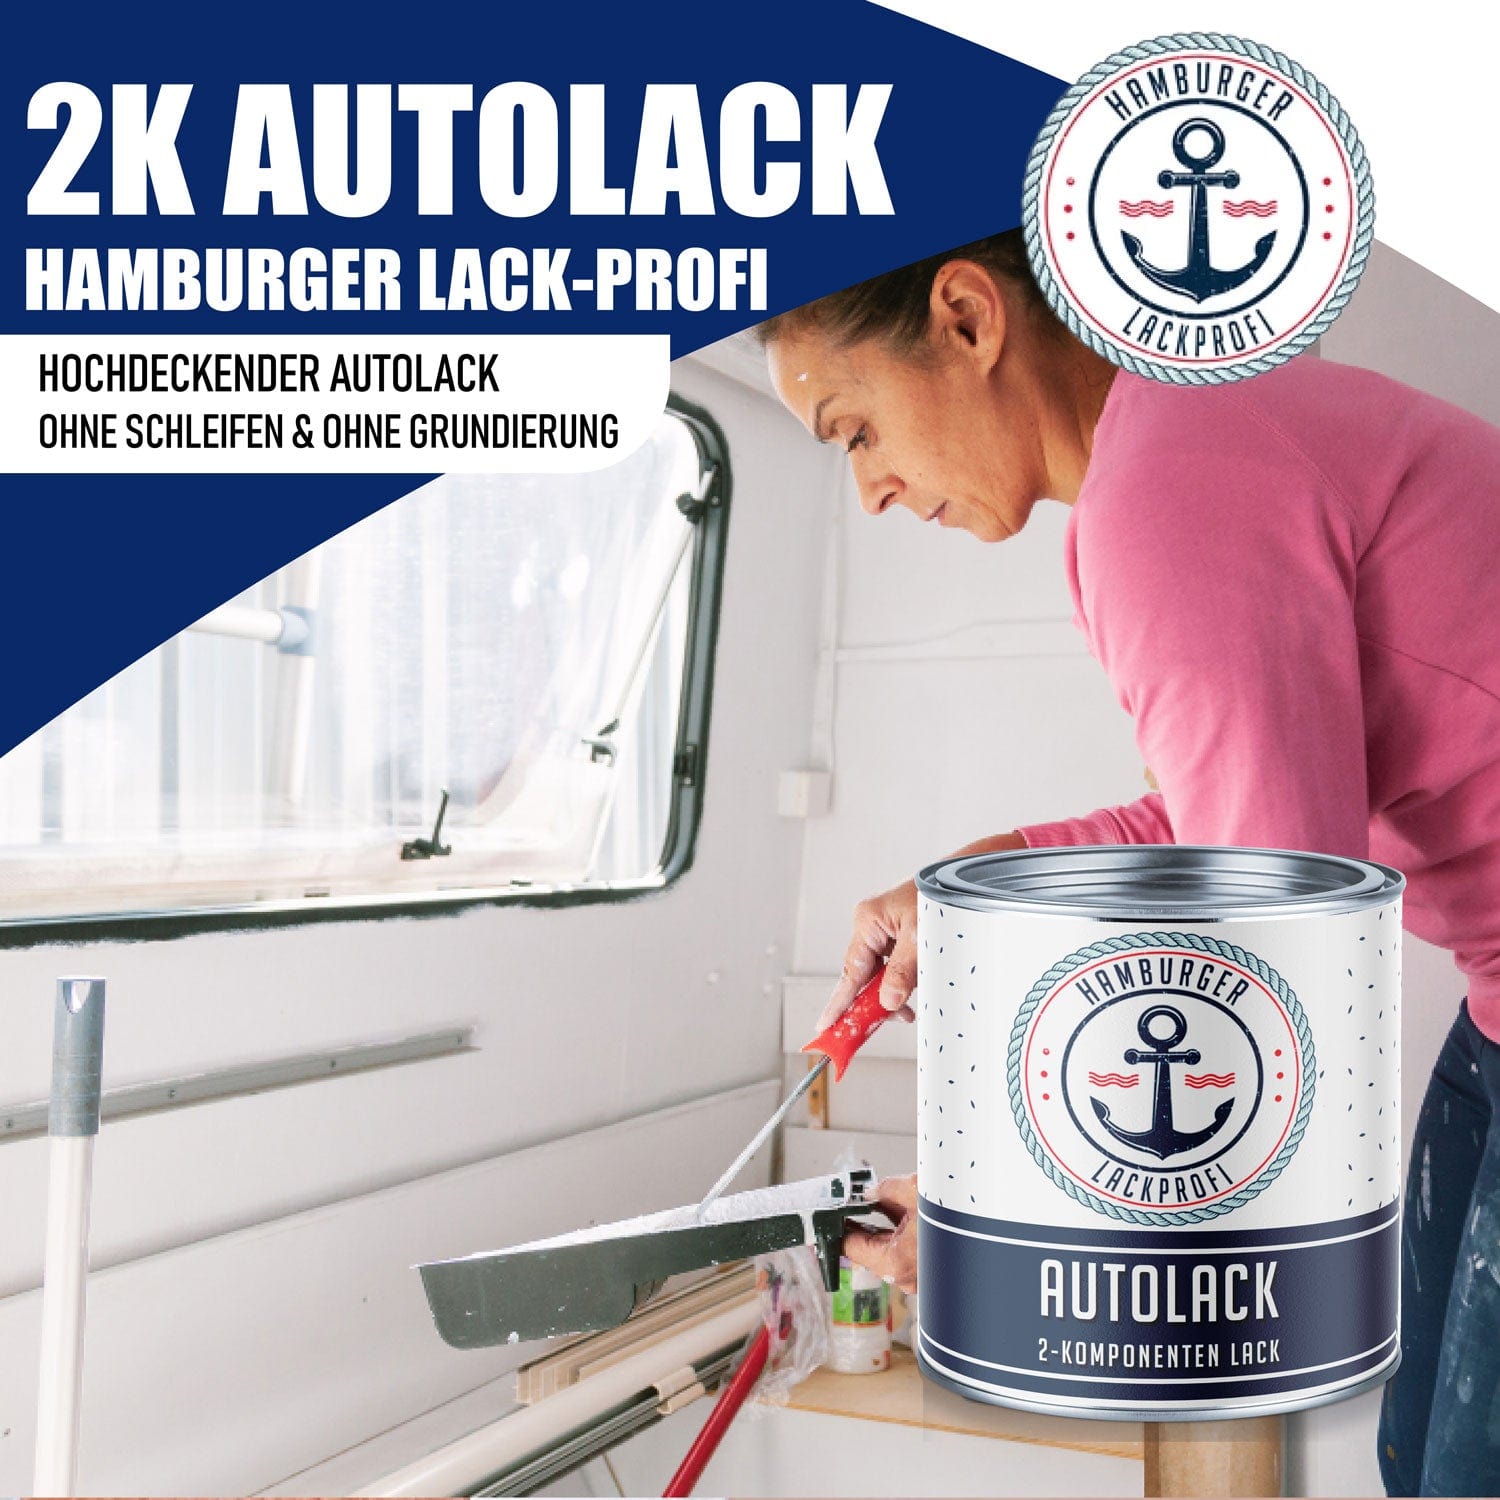 Hamburger Lack-Profi Lacke & Beschichtungen Hamburger Lack-Profi 2K Autolack in Telegrau 4 RAL 7047 mit Lackierset (X300) & Verdünnung (1 L) - 30% Sparangebot